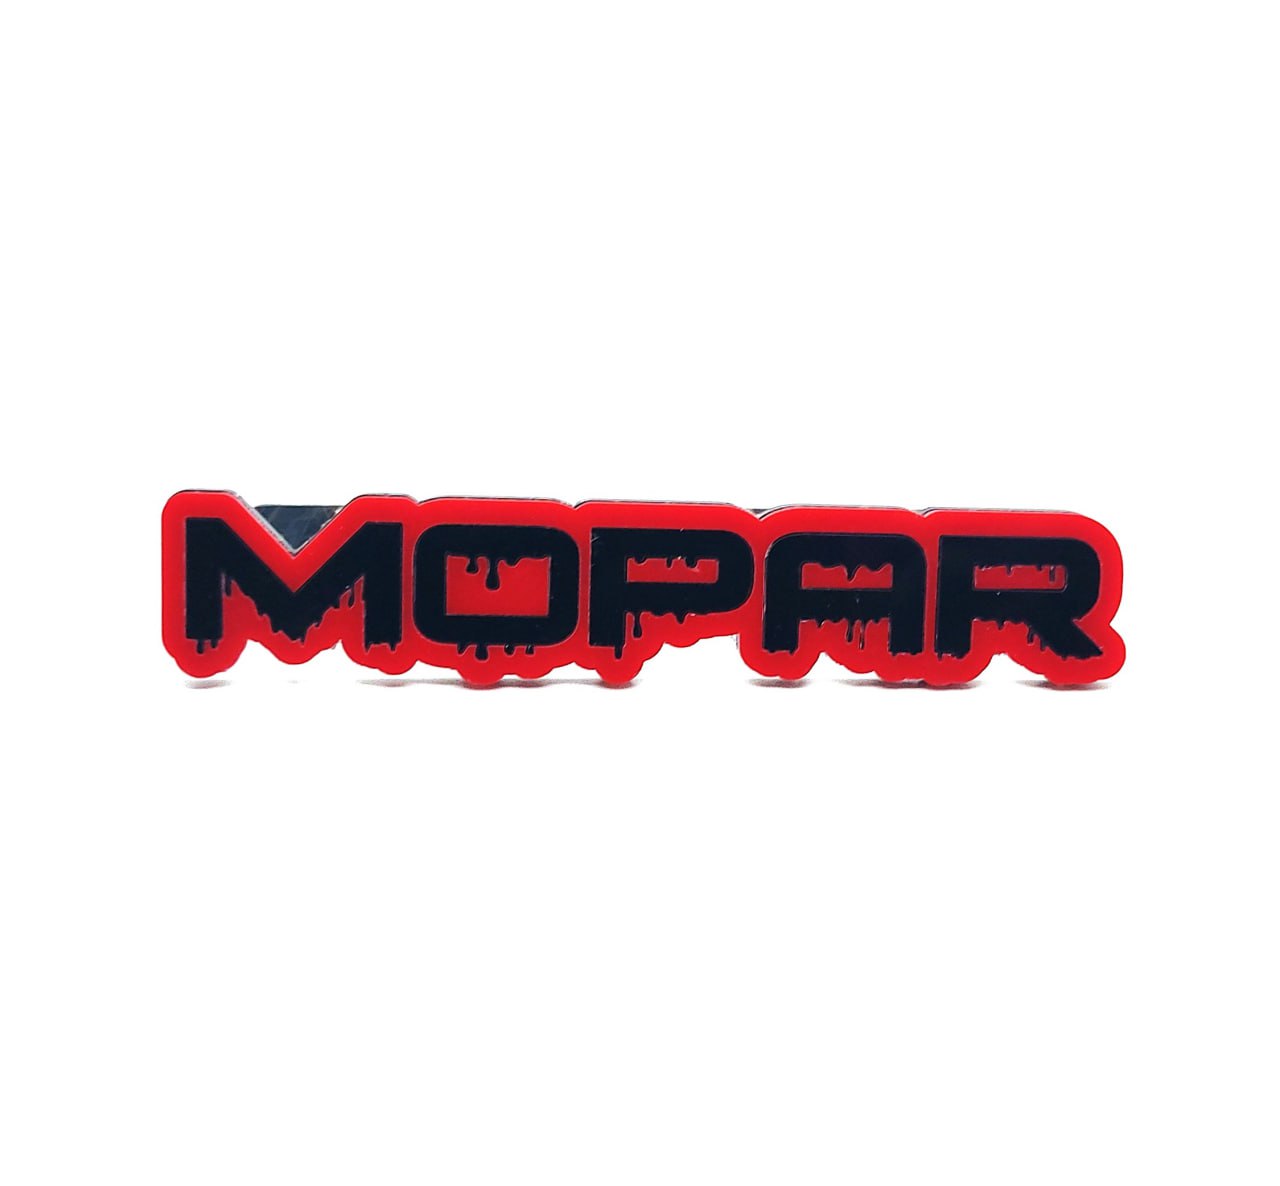 Chrysler Radiator grille emblem with Mopar Blood logo - decoinfabric